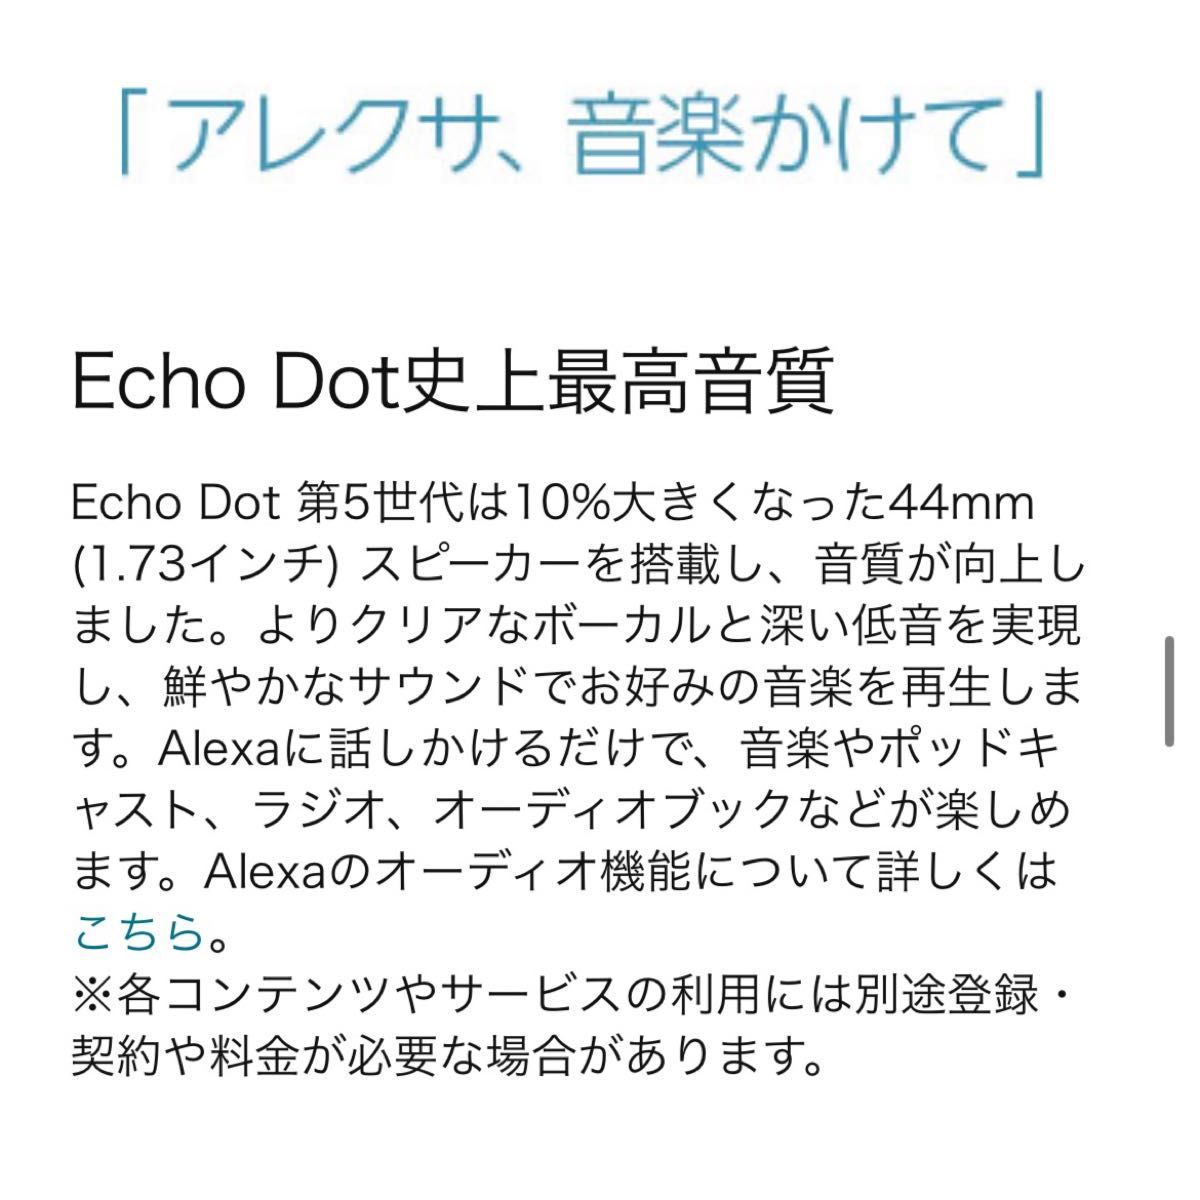 Echo Dot エコードット 第5世代 スマートスピーカー グレーシャーホワイト